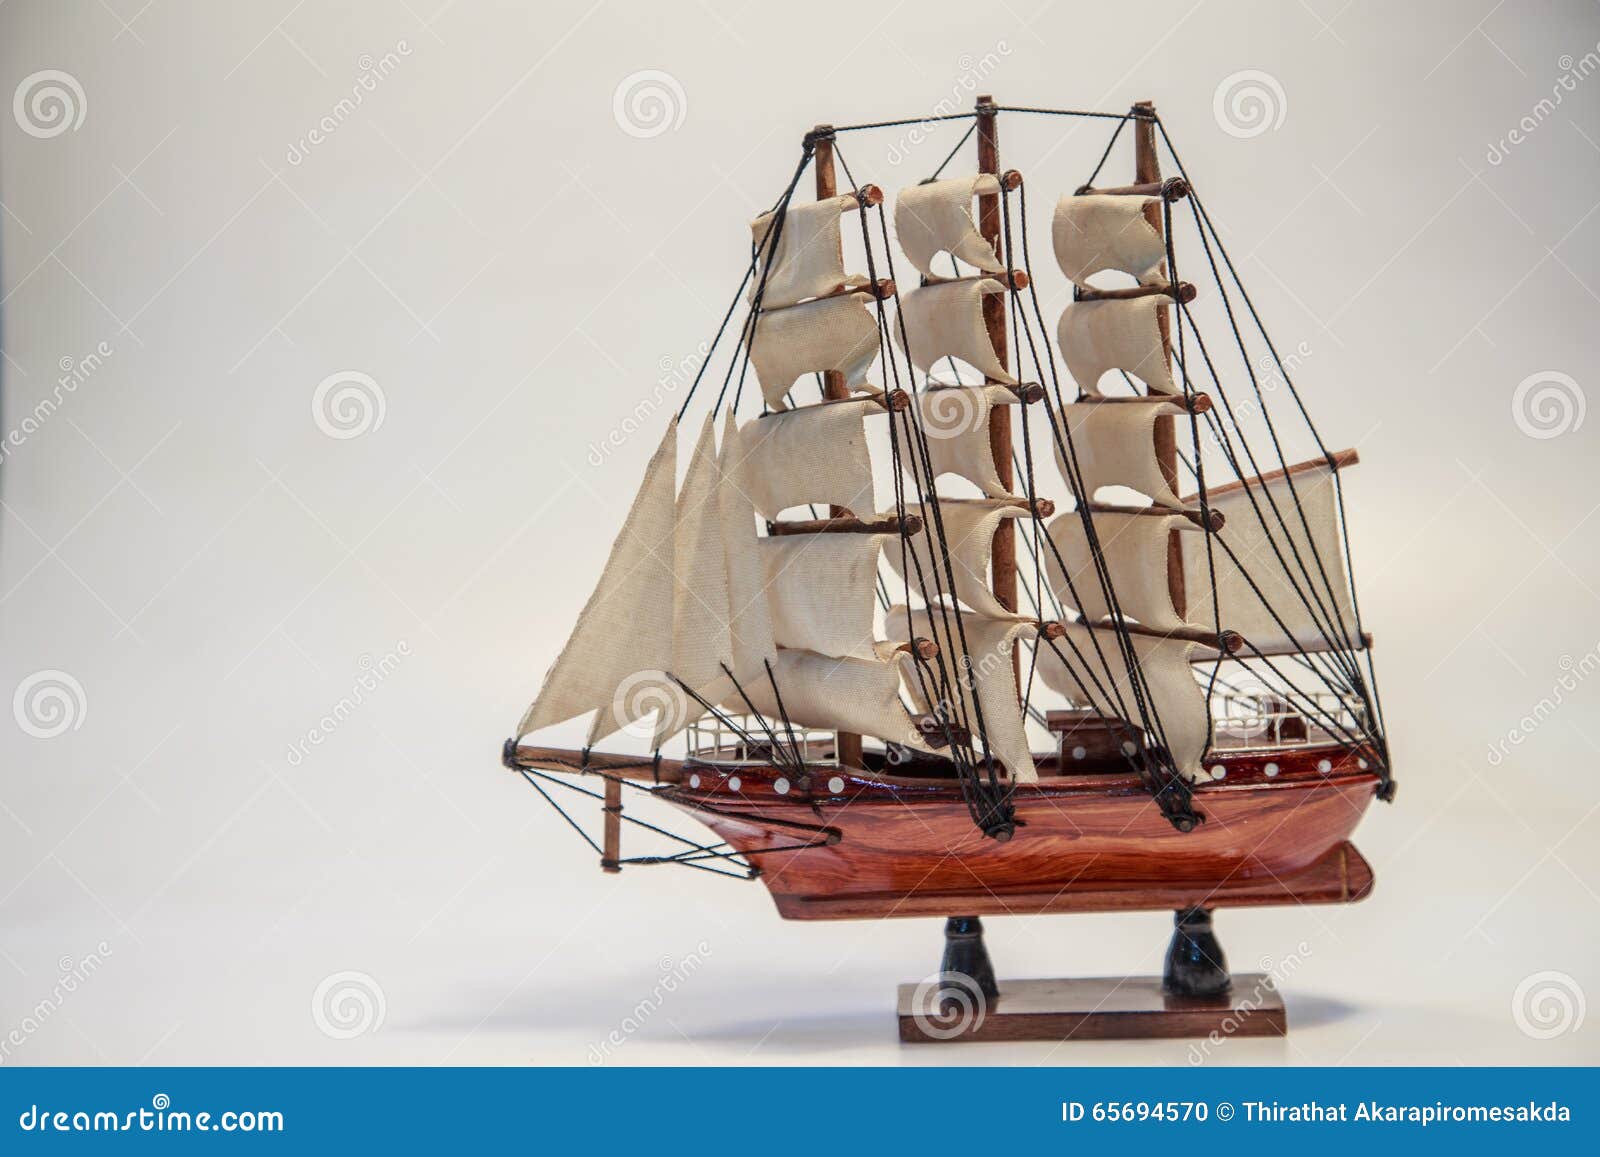 https://thumbs.dreamstime.com/z/boat-model-small-wooden-ship-65694570.jpg